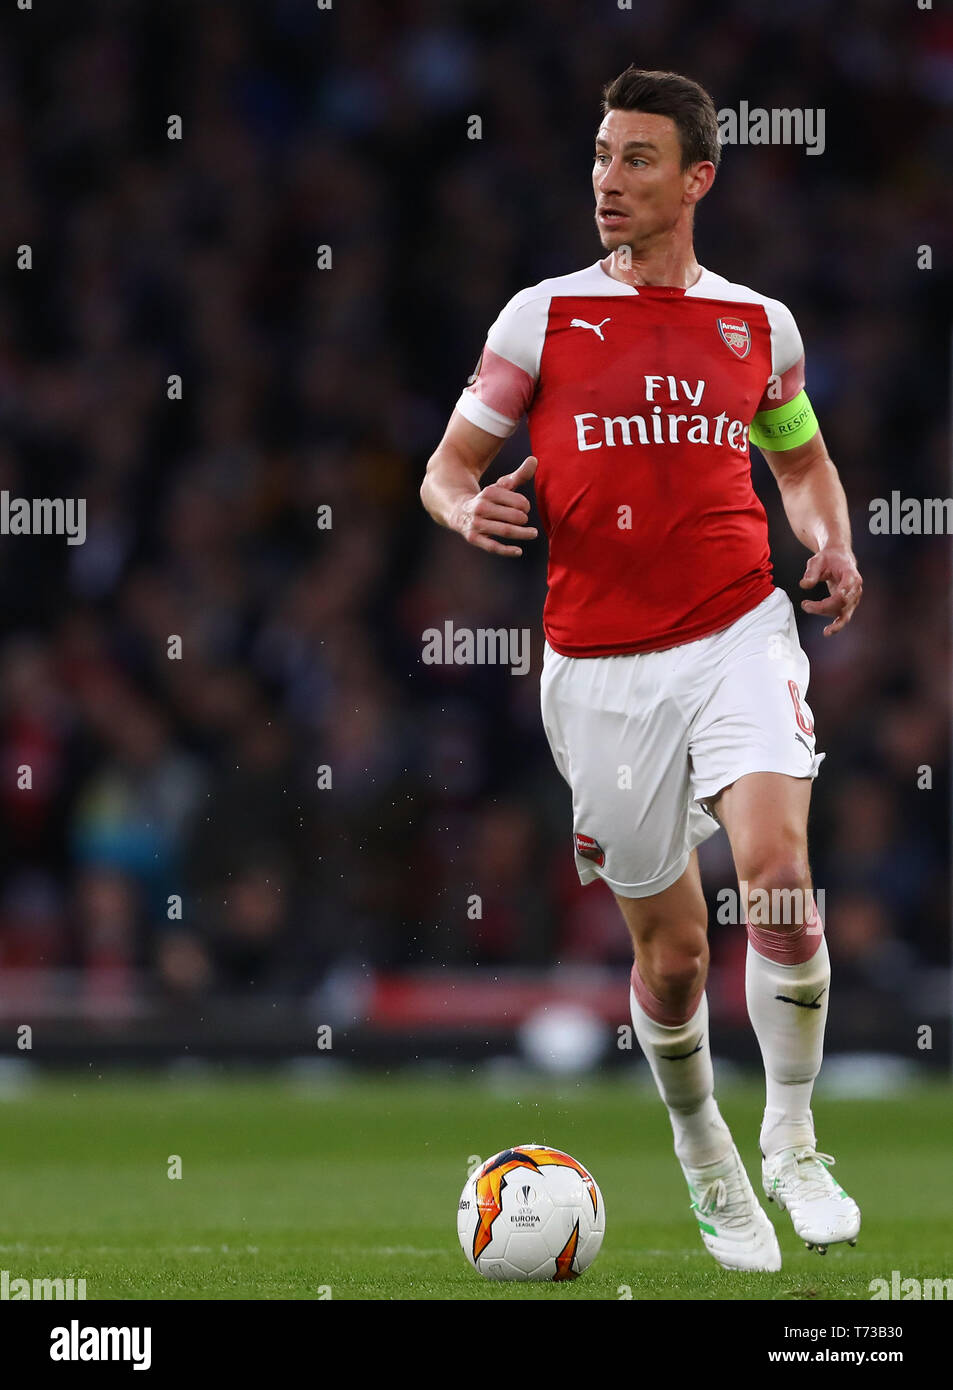 Laurent Koscielny del Arsenal - Arsenal v Valencia, UEFA Europa League Semi Final - primera pierna, Emirates Stadium, Londres (Holloway) - 2 de mayo de 2019 Foto de stock